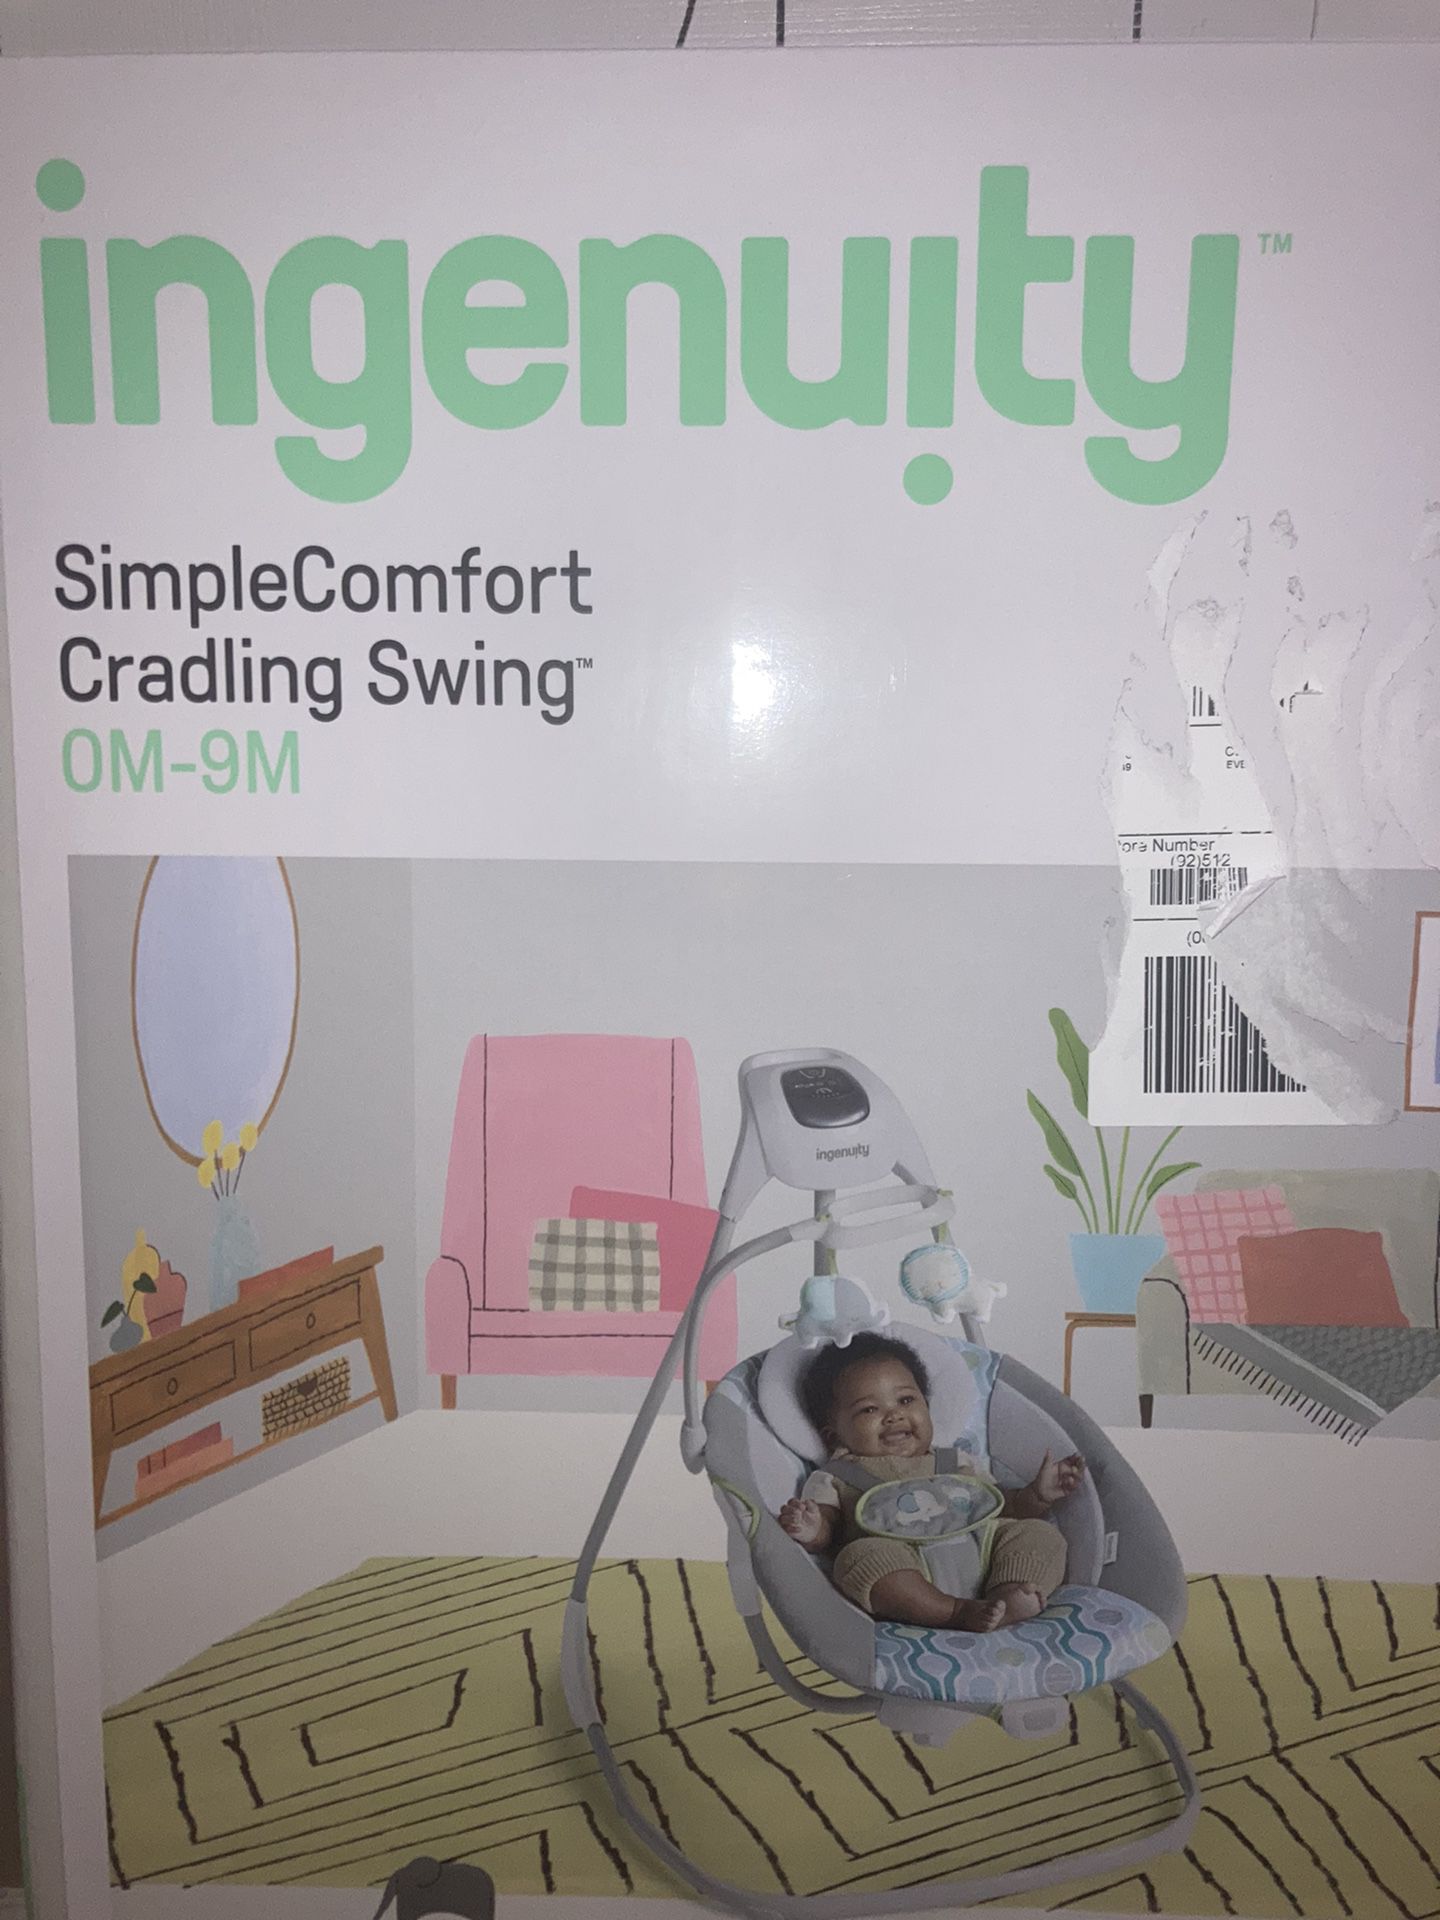 Ingenuity SimpleComfort Cradling Swing